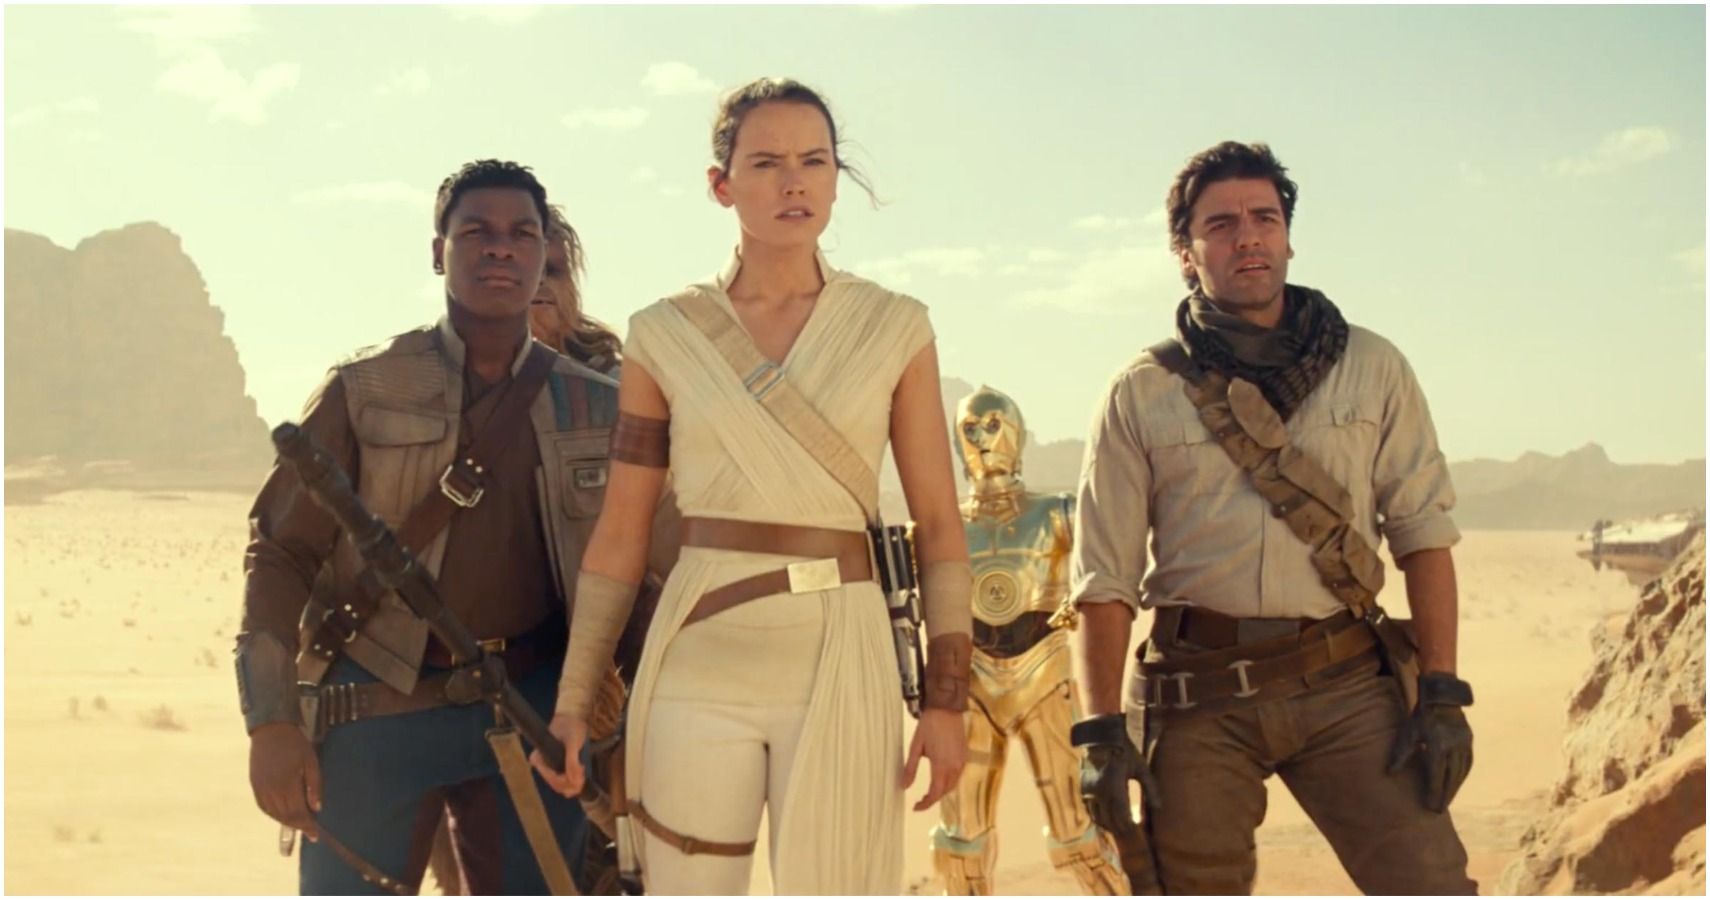 The Force Awakens - Disney Took Over Star Wars